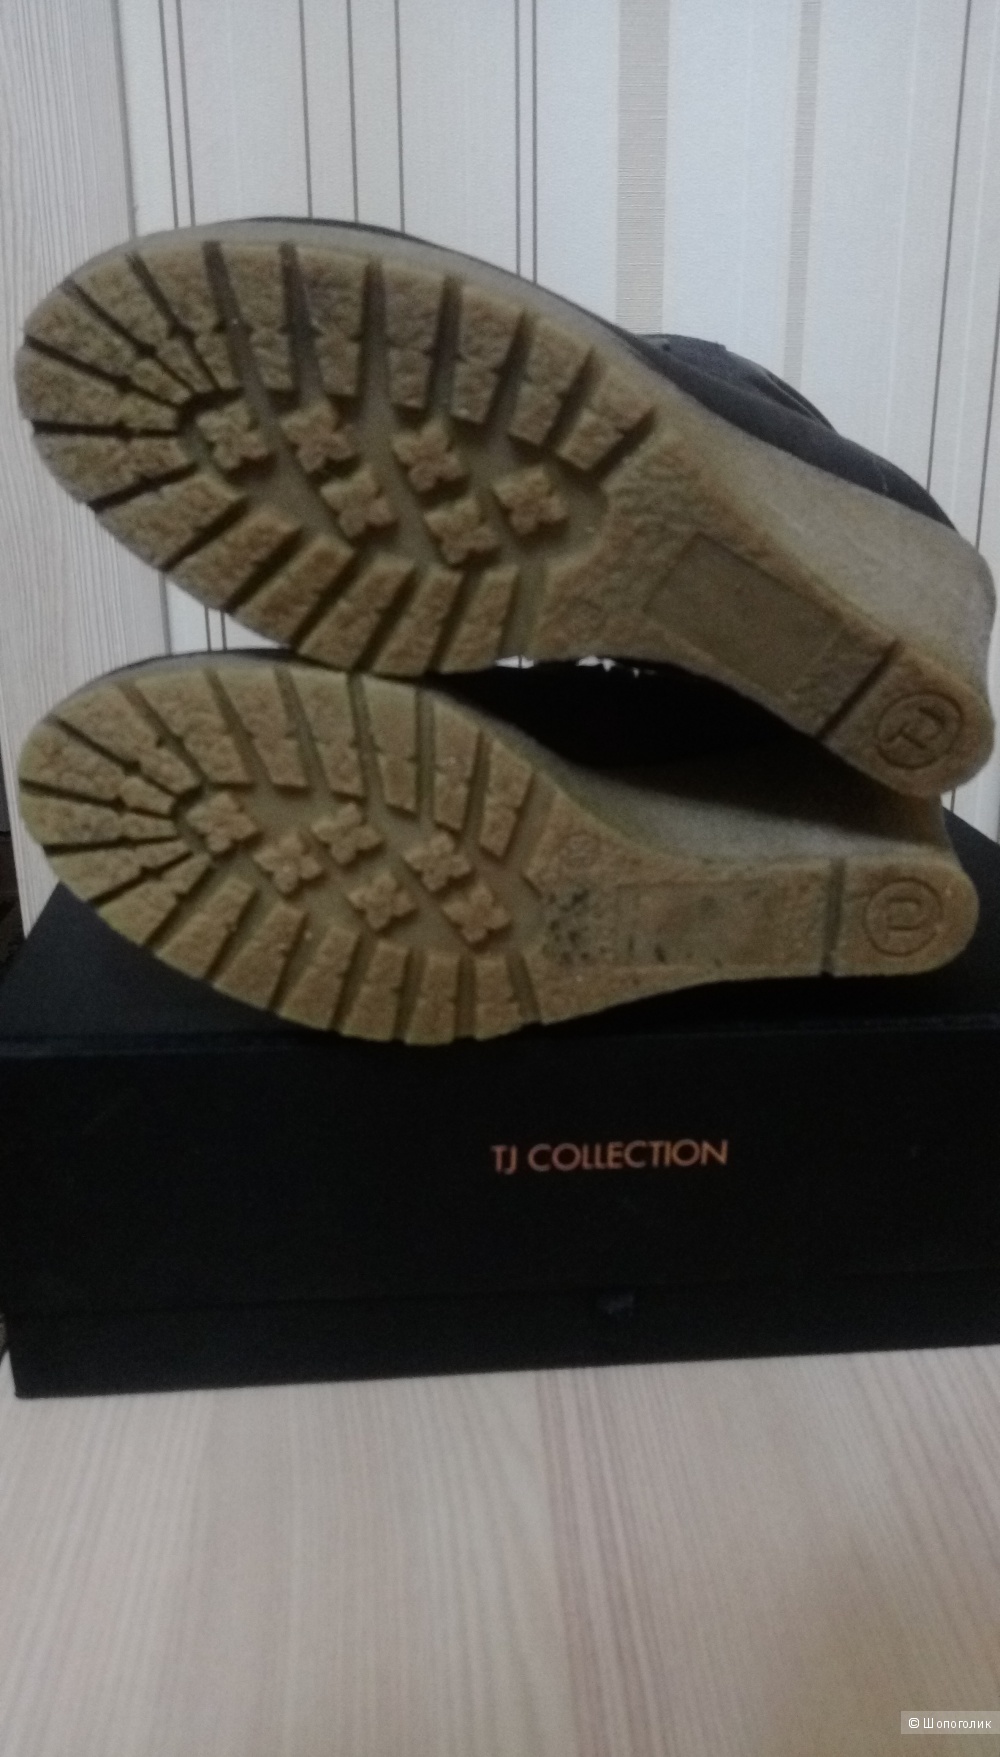 Ботинки зимние TJ Collection, размер 39